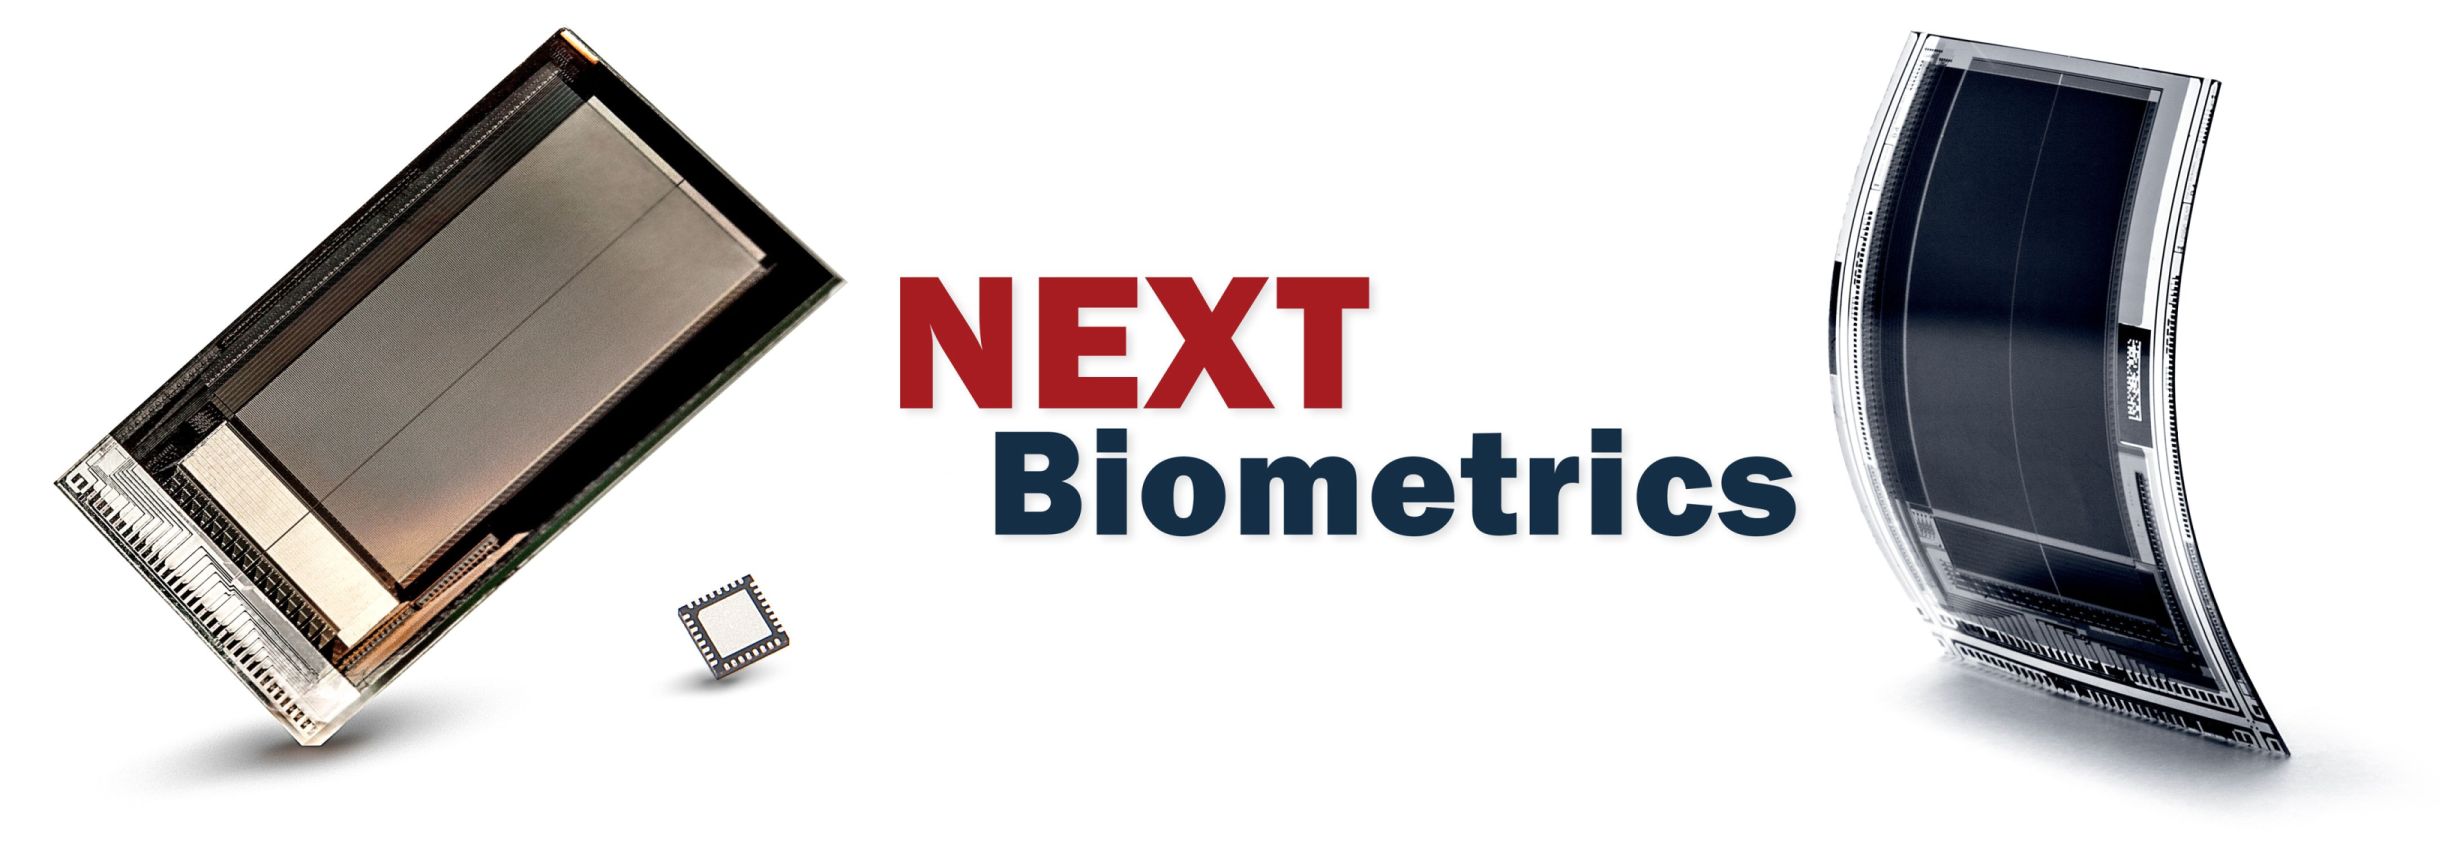 NEXT Biometrics Anno